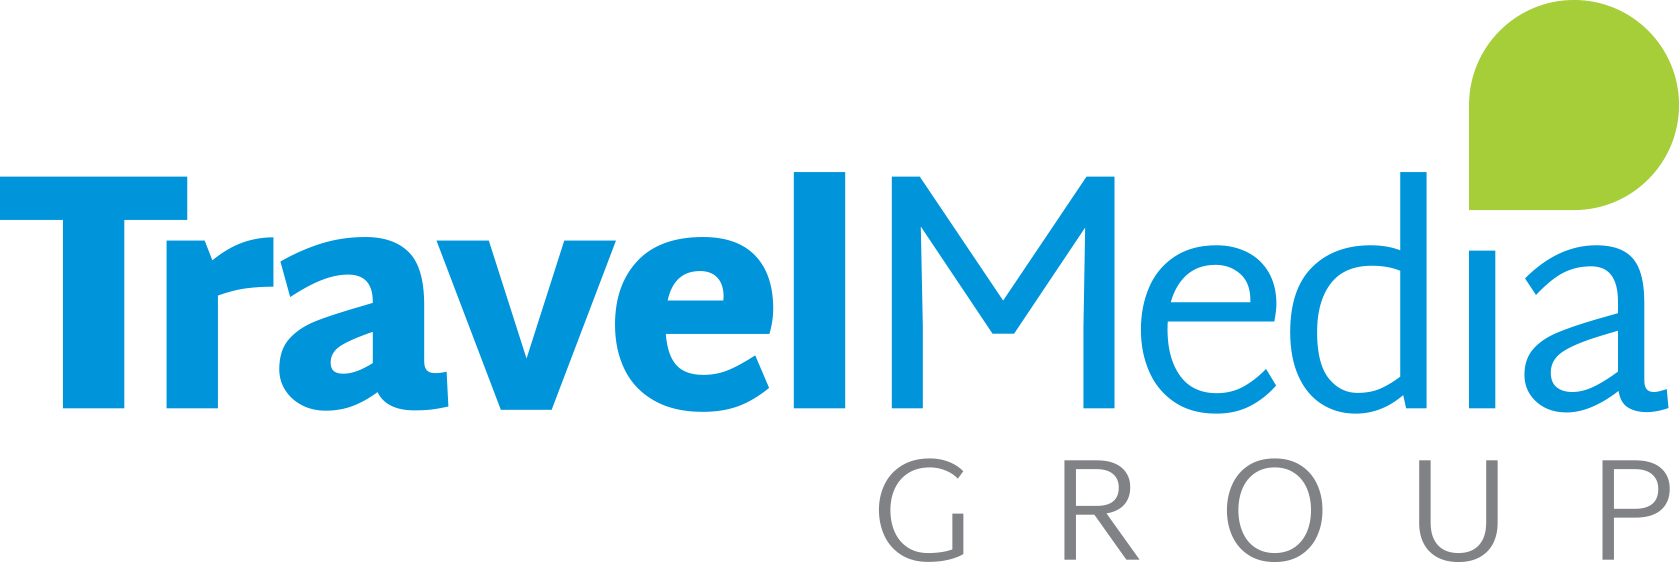 Travel Media Group Logo PNG image